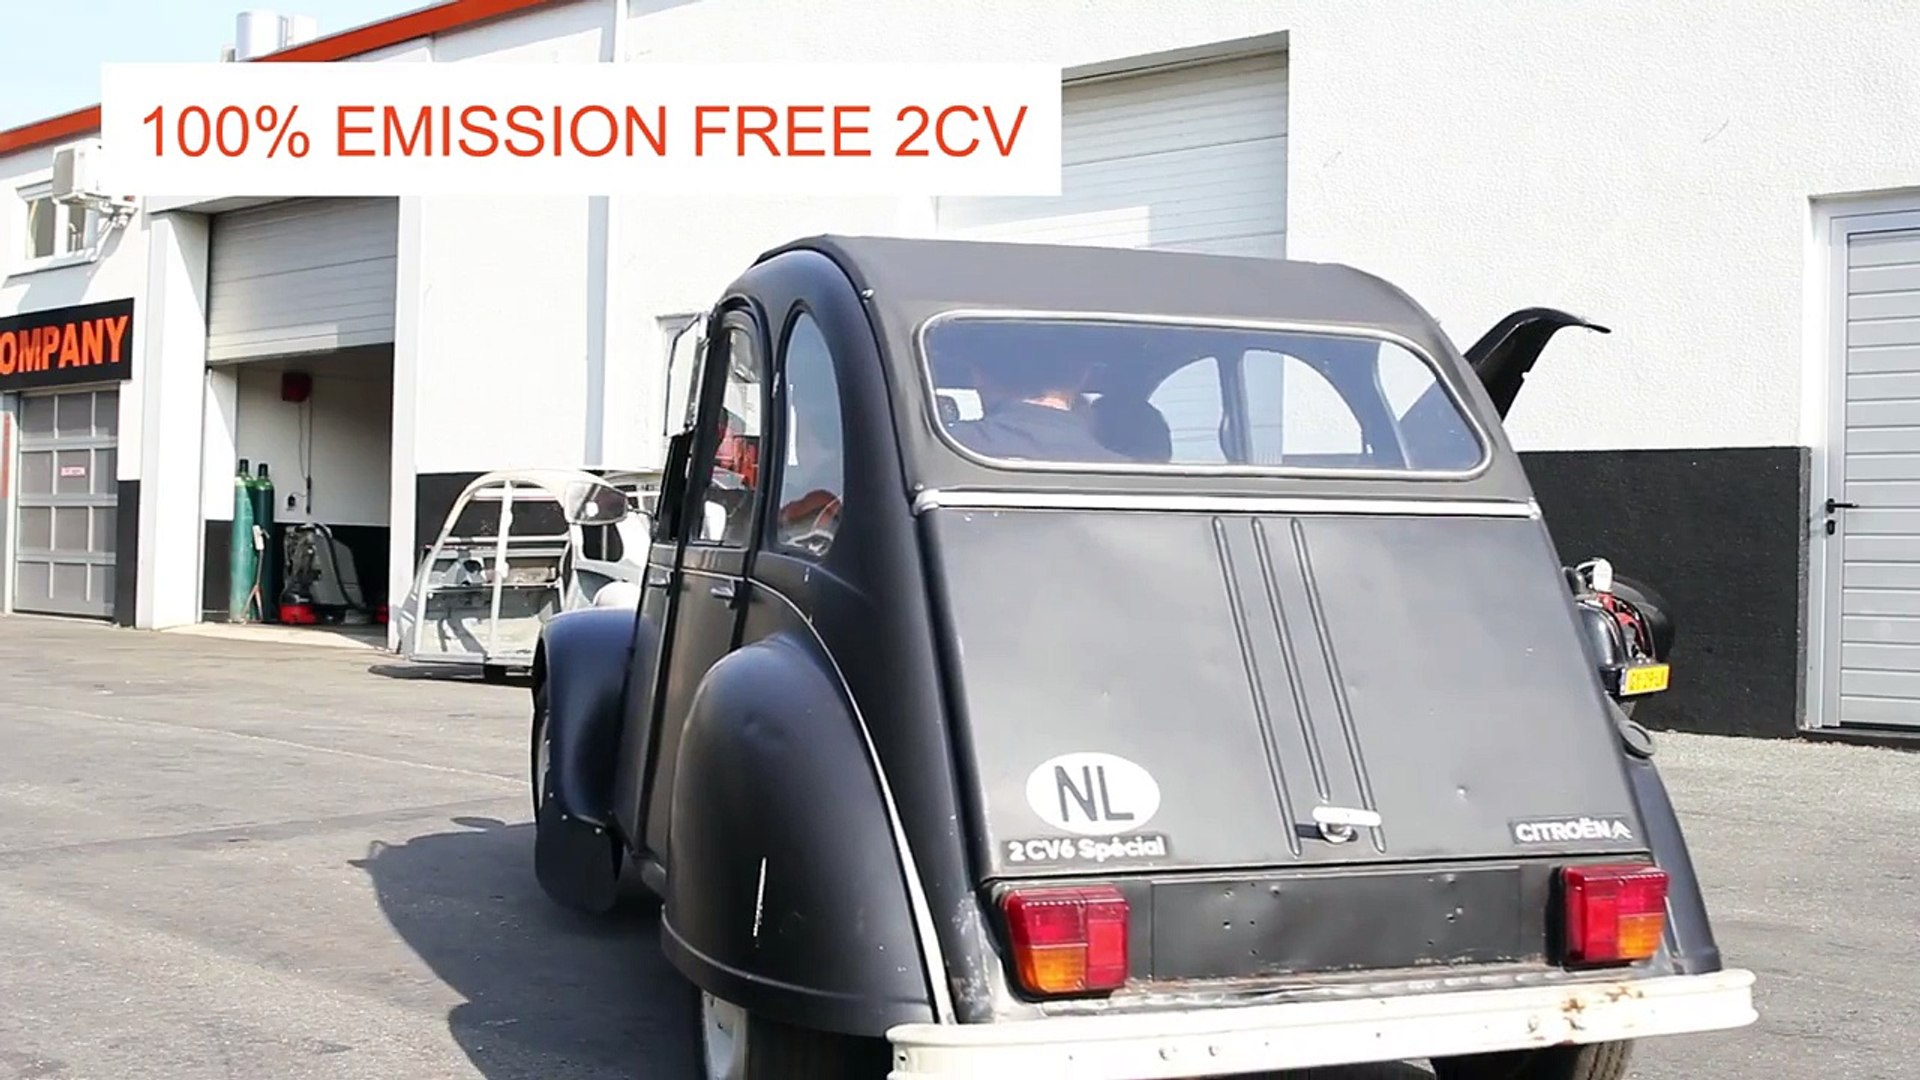 Burton 2CV Parts - 100% emission free Citroën 2CV! - video Dailymotion